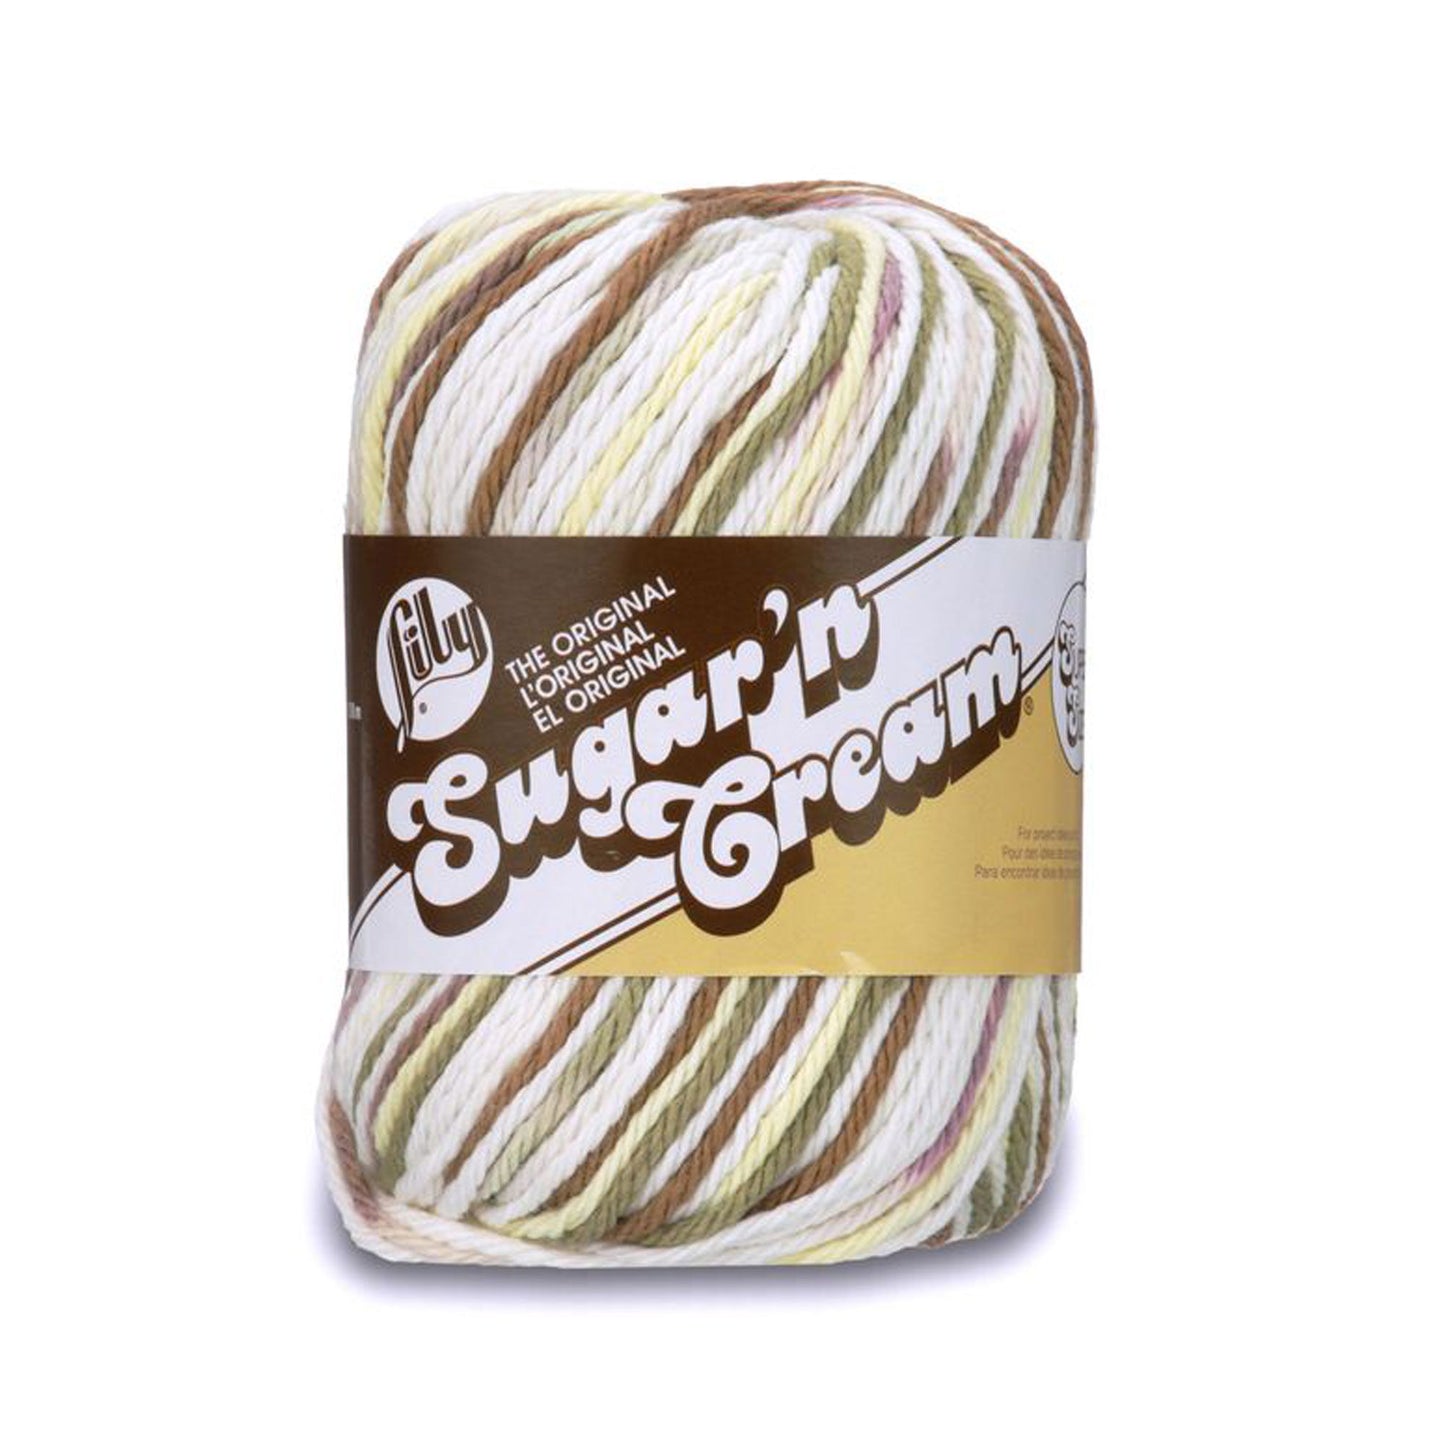 Lily Sugar'n Cream 100% Cotton yarn - Wooded Moss SUPER SIZE